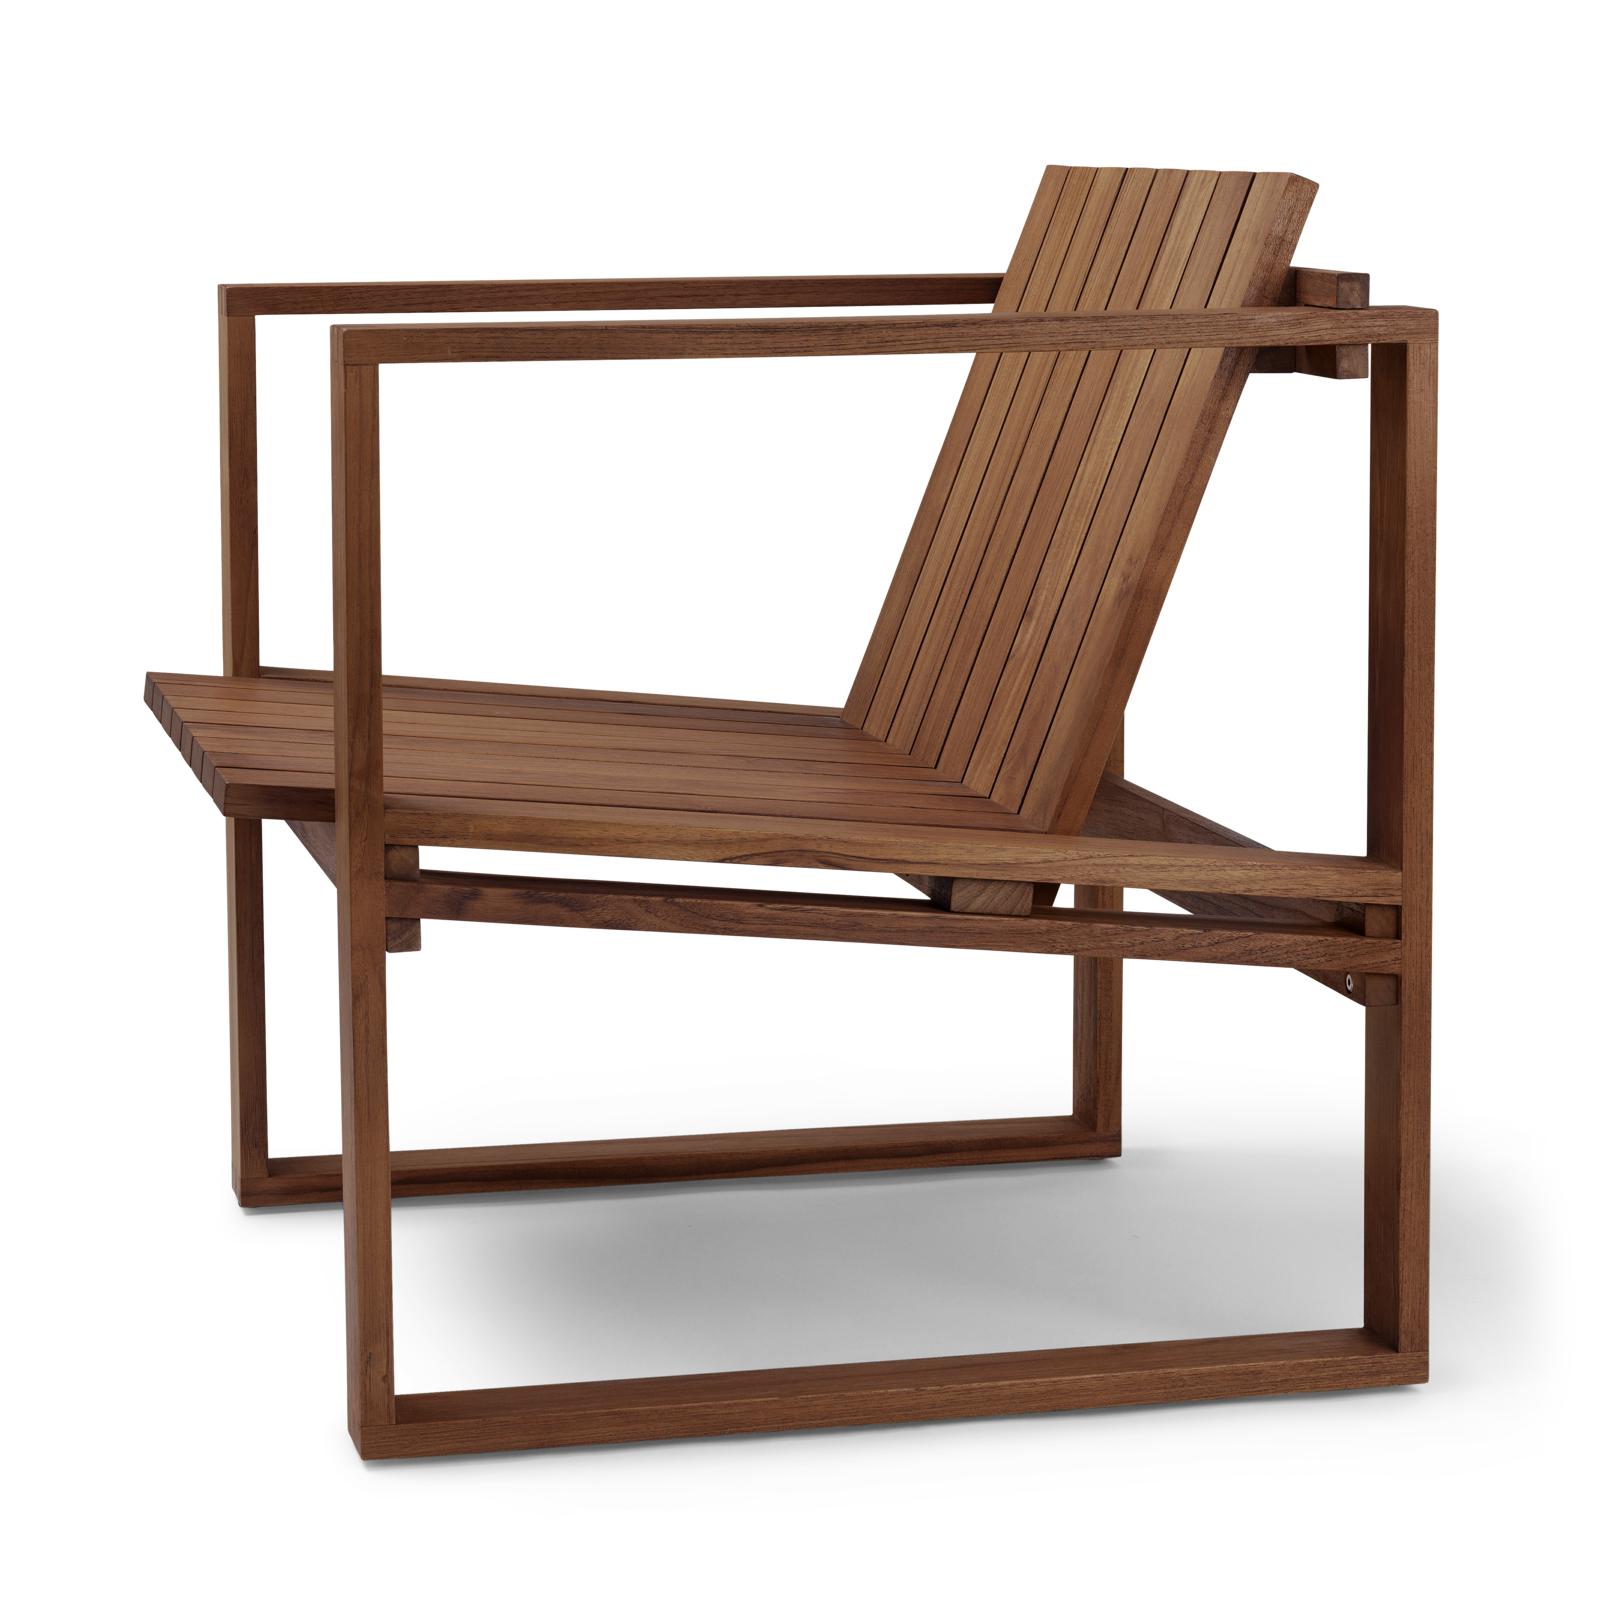 Carl Hansen Bk11 Lounge Chair